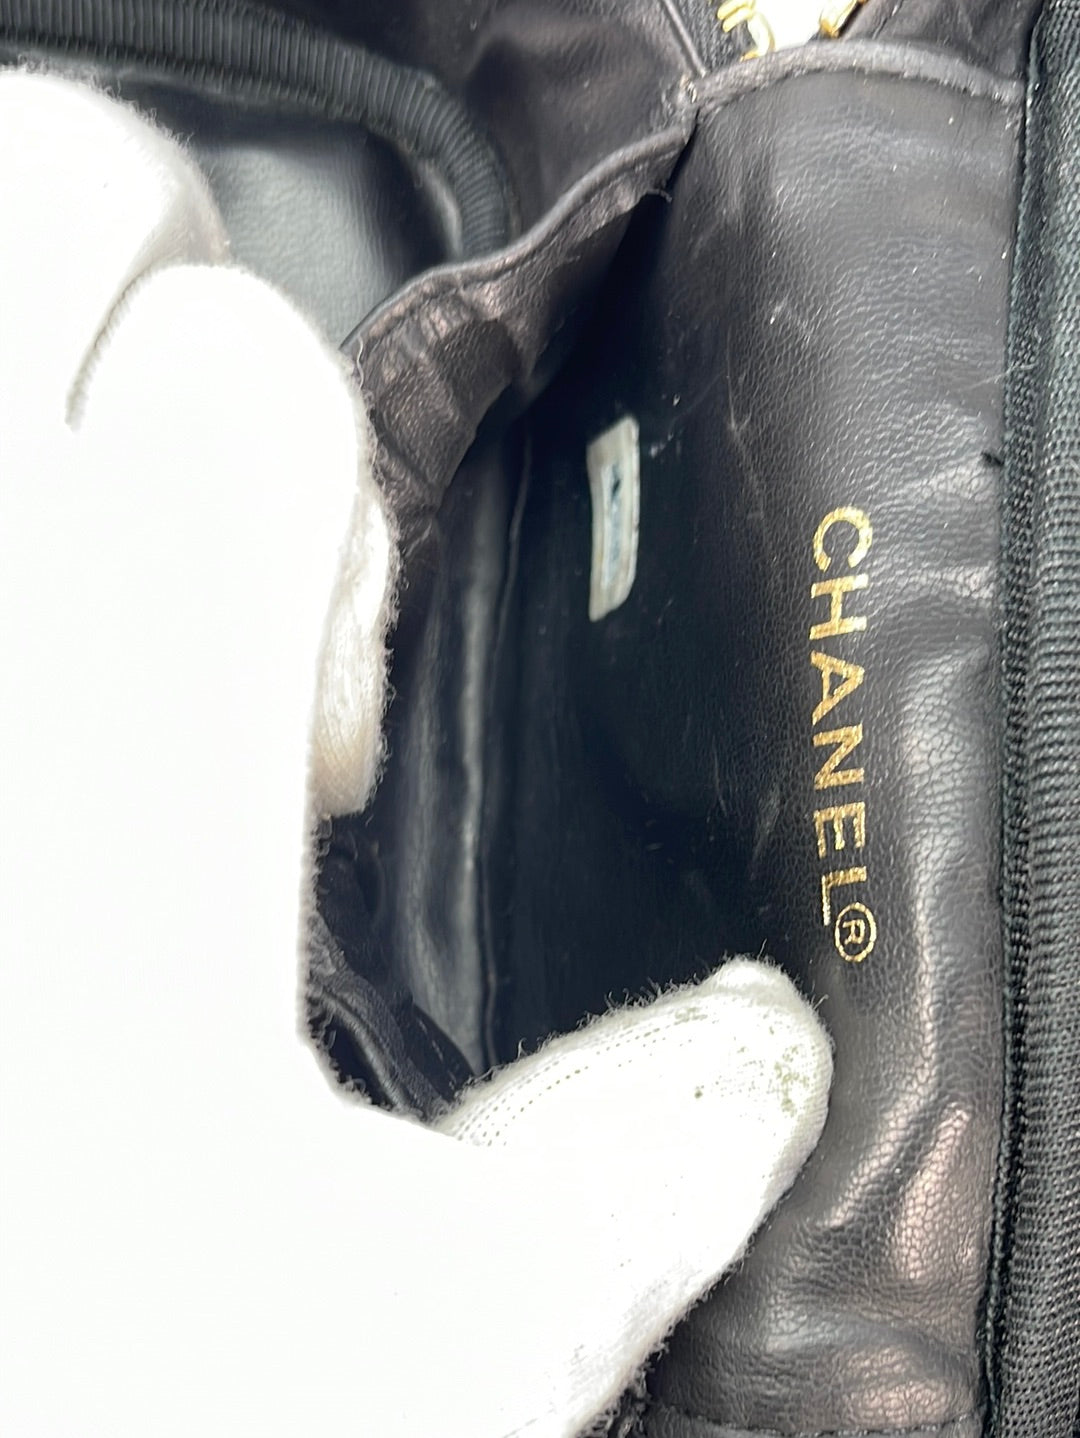 Vintage Chanel Black Quilted Caviar Leather Vanity Case K6VVCTK 011123